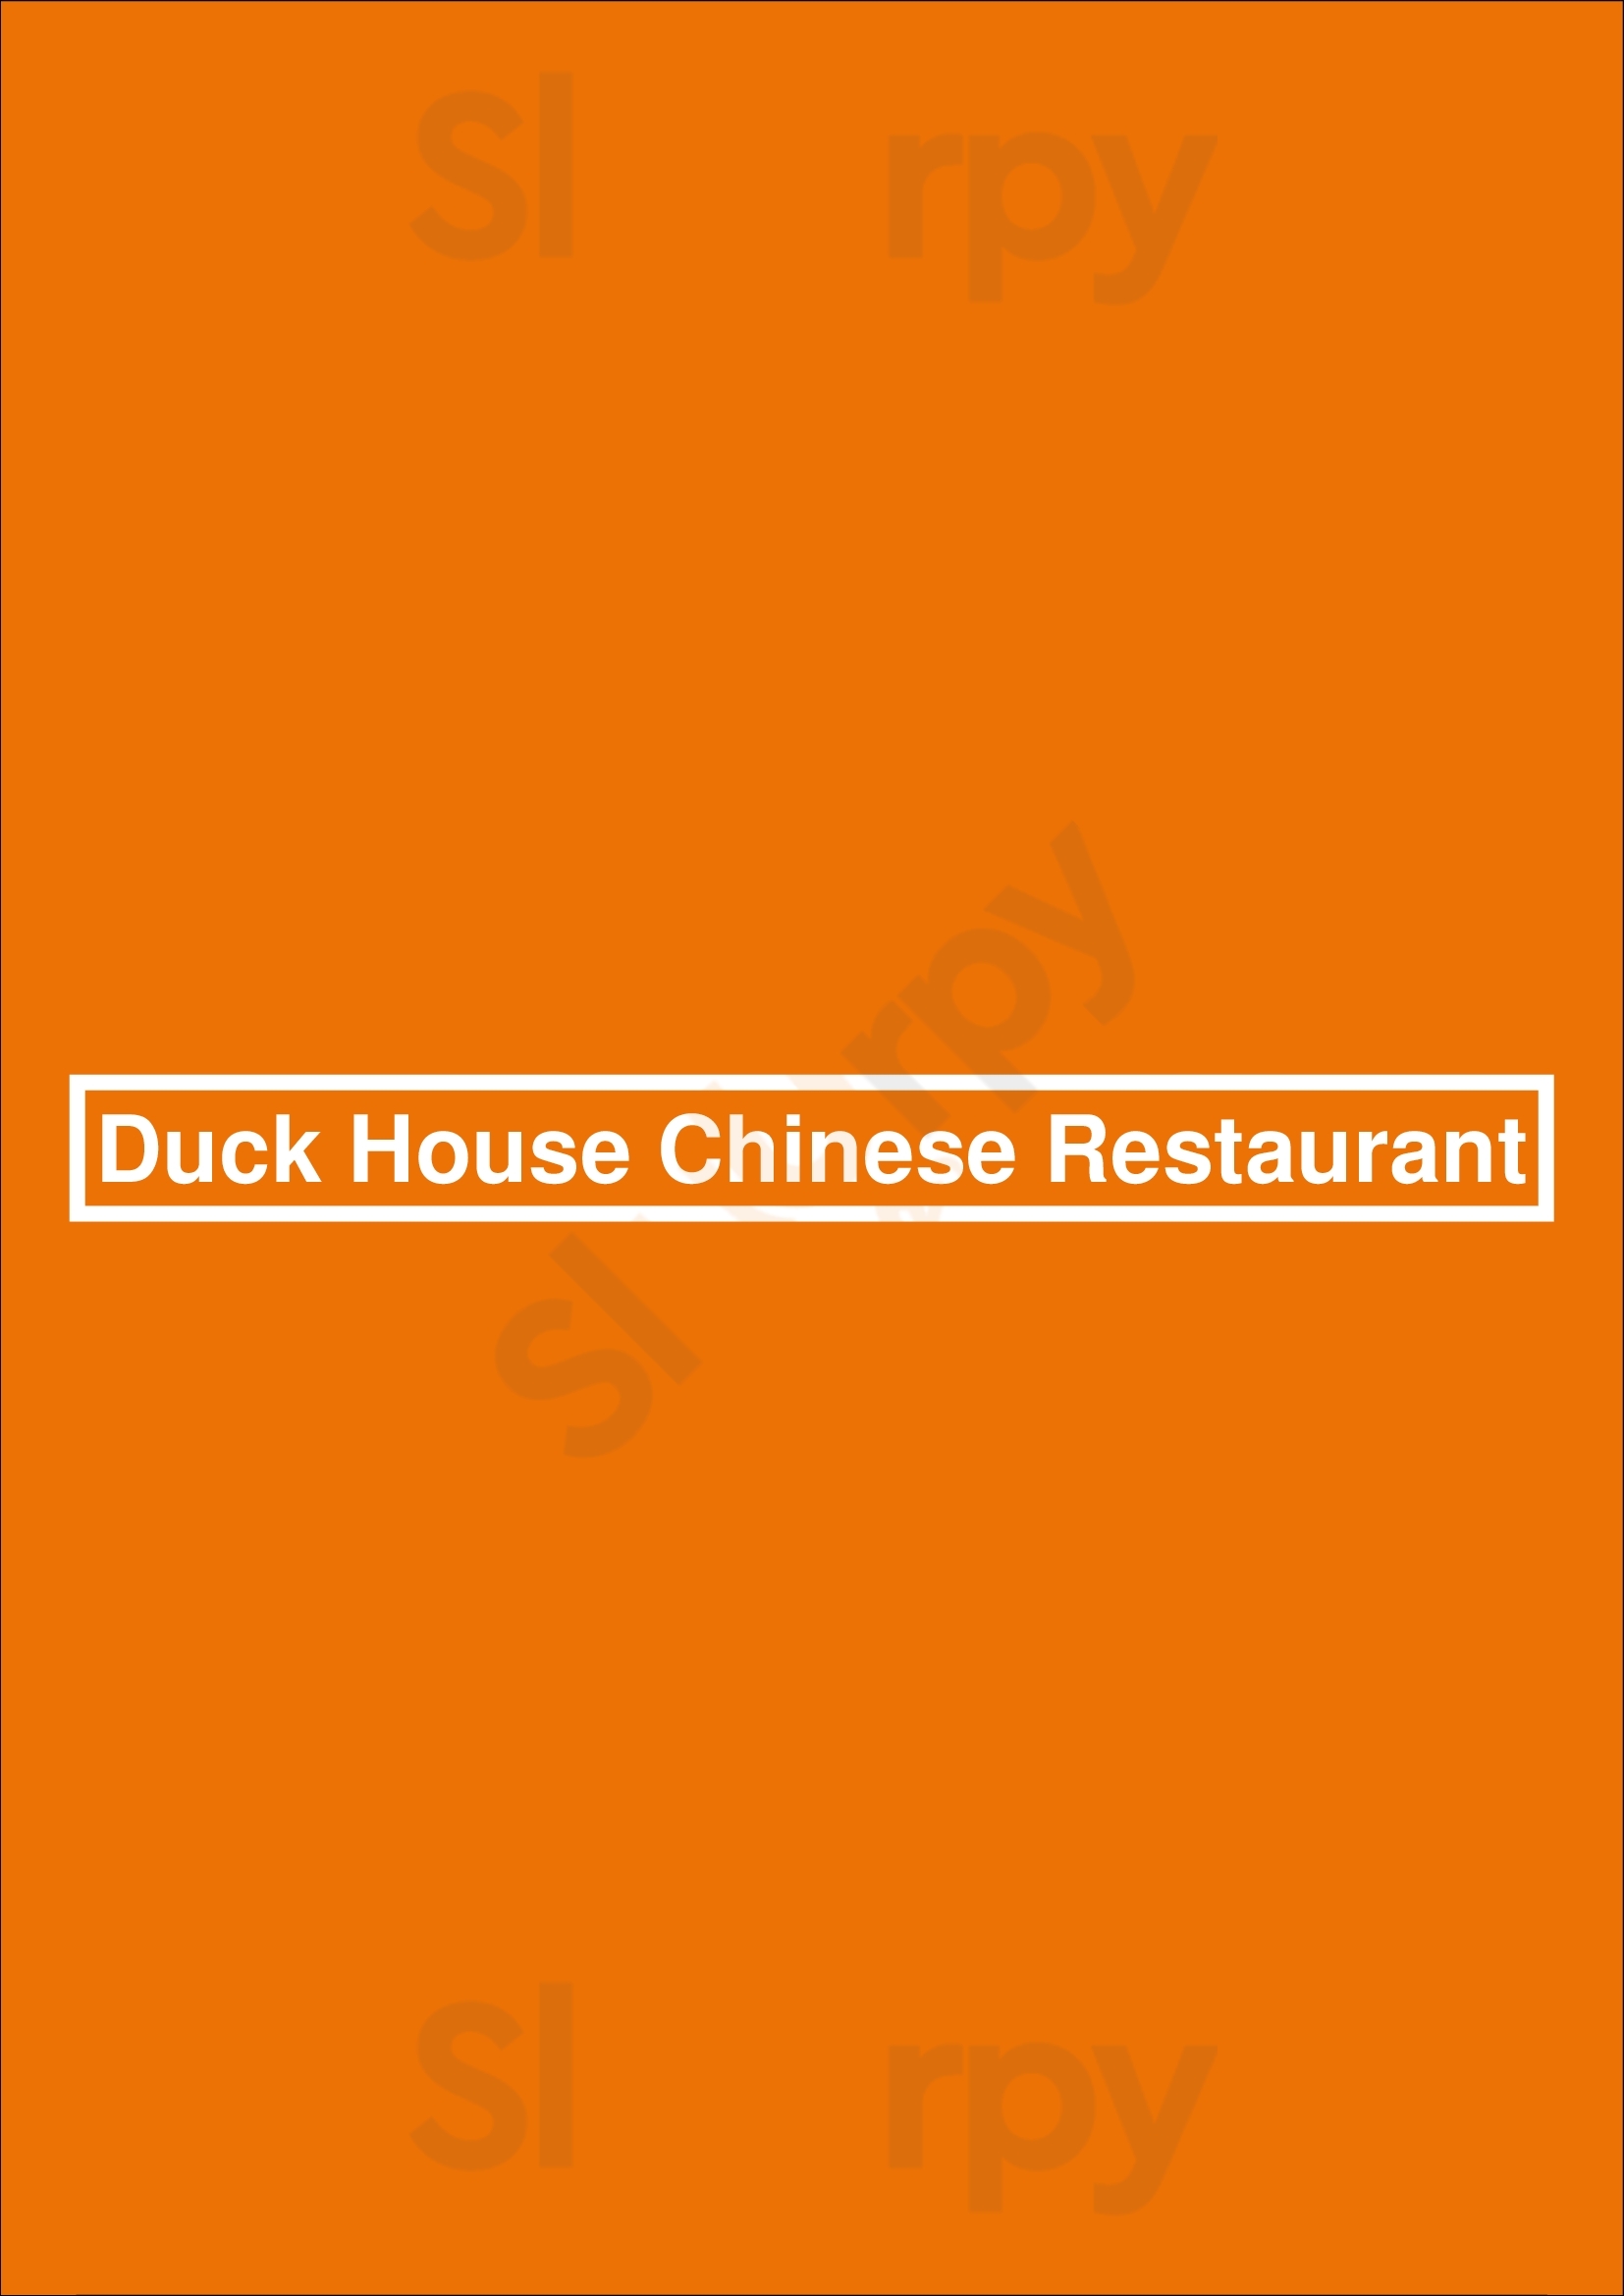 Duck House Chinese Restaurant Portland Menu - 1